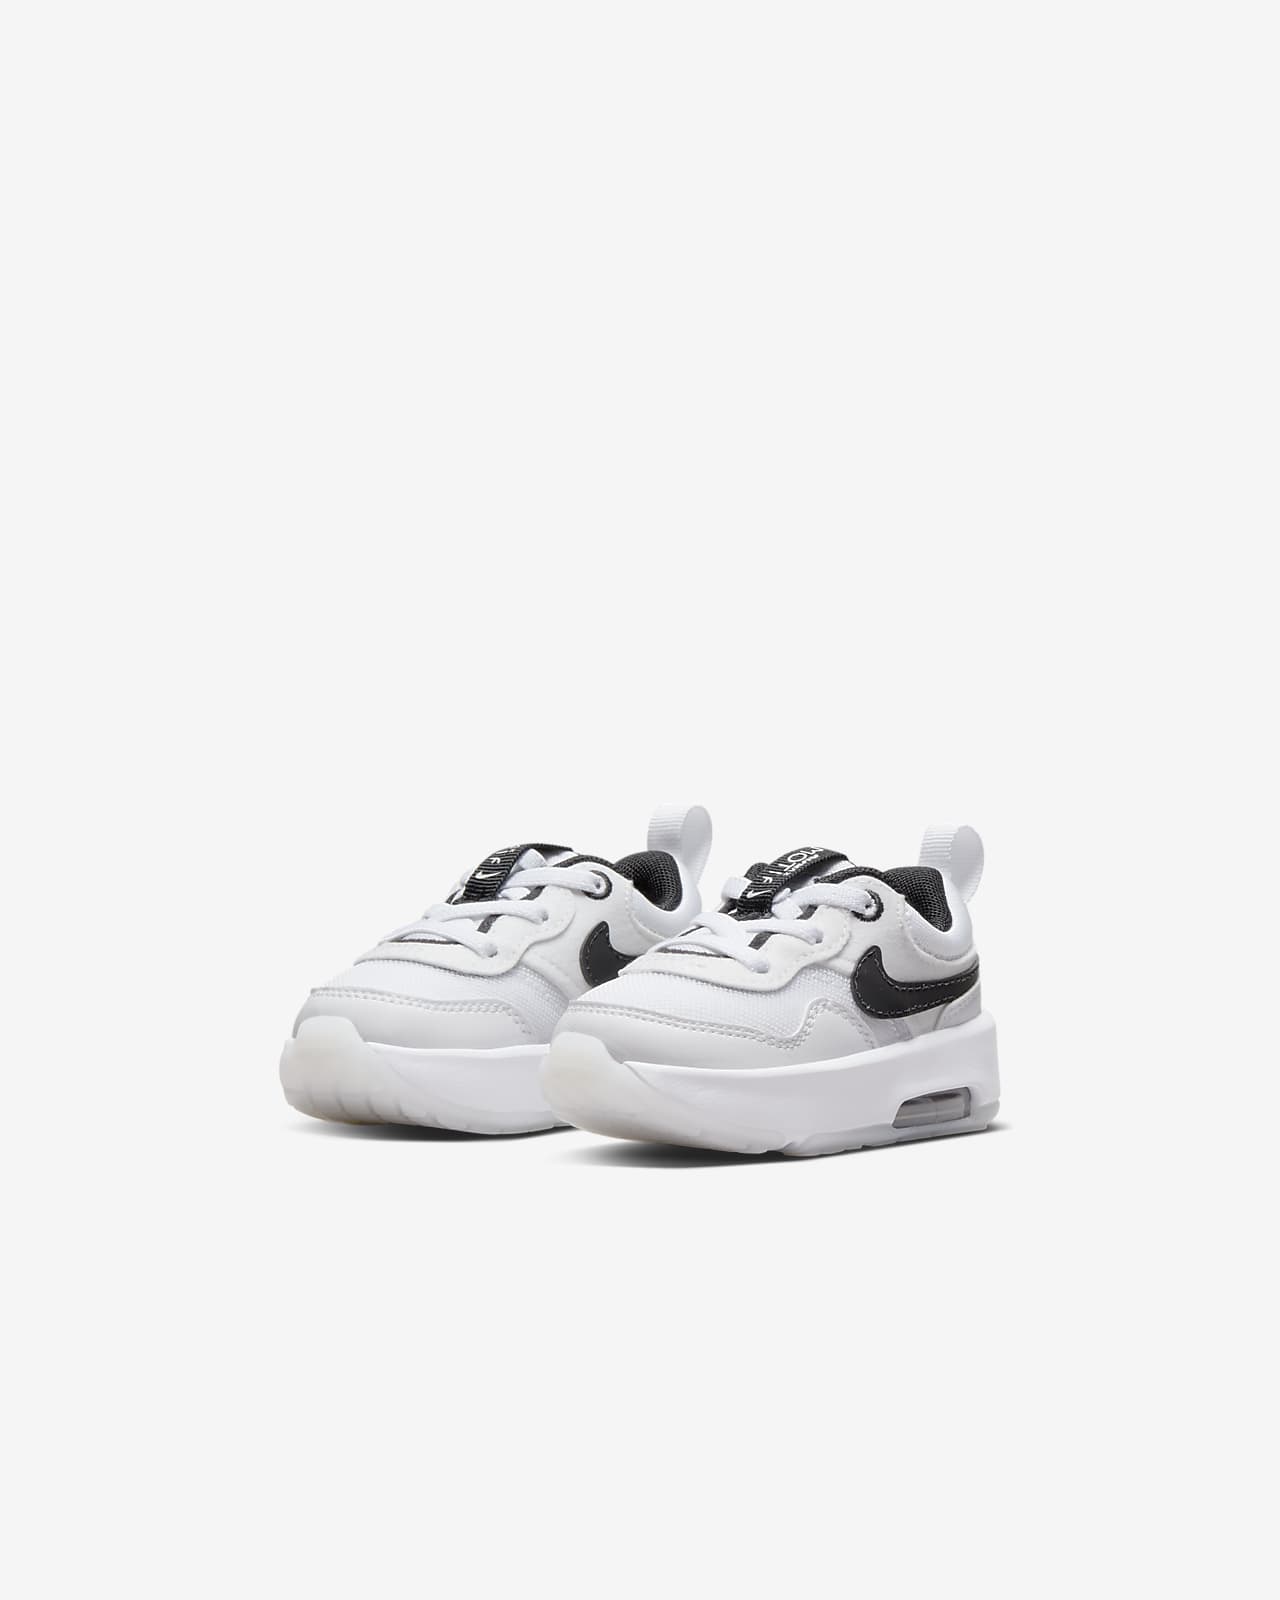 Motif Max Shoes. Air Nike Baby/Toddler